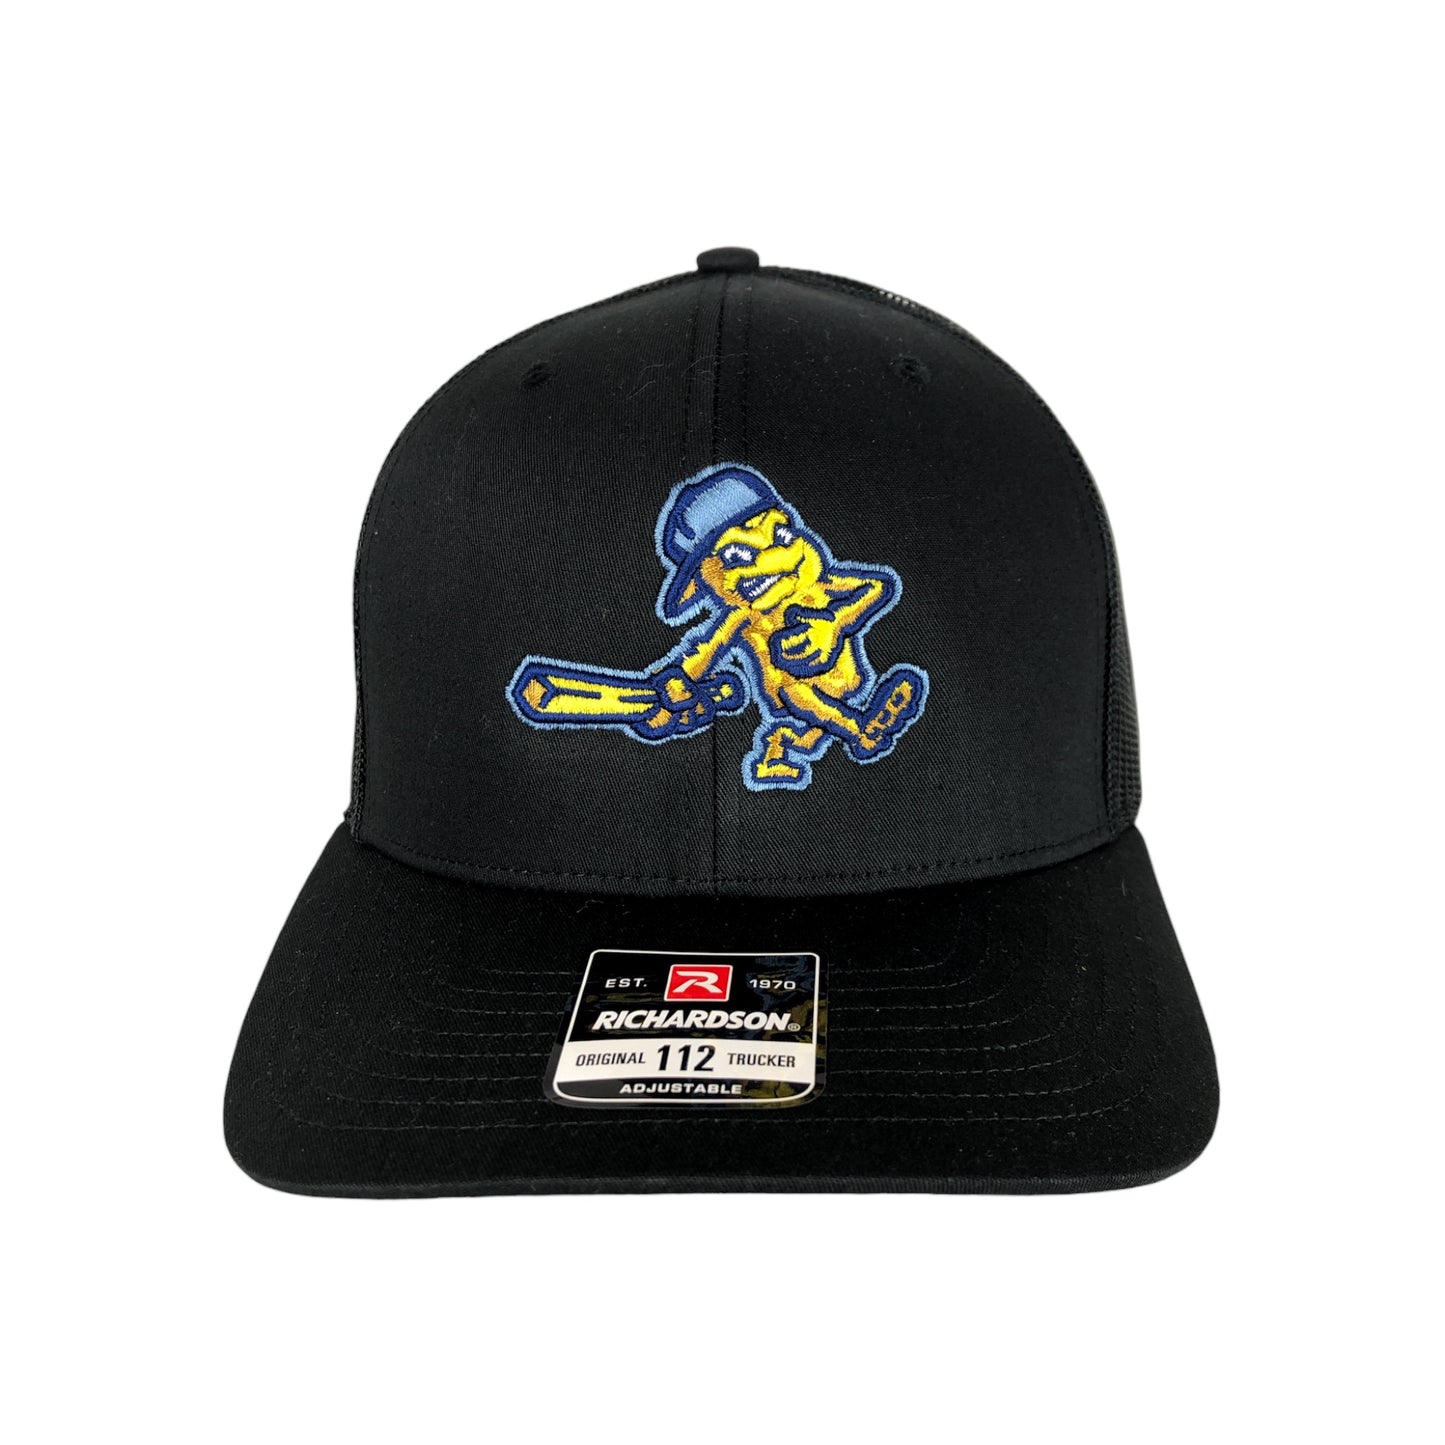 DubSea Fish Sticks raised logo on Richardson all black adjustable trucker hat.